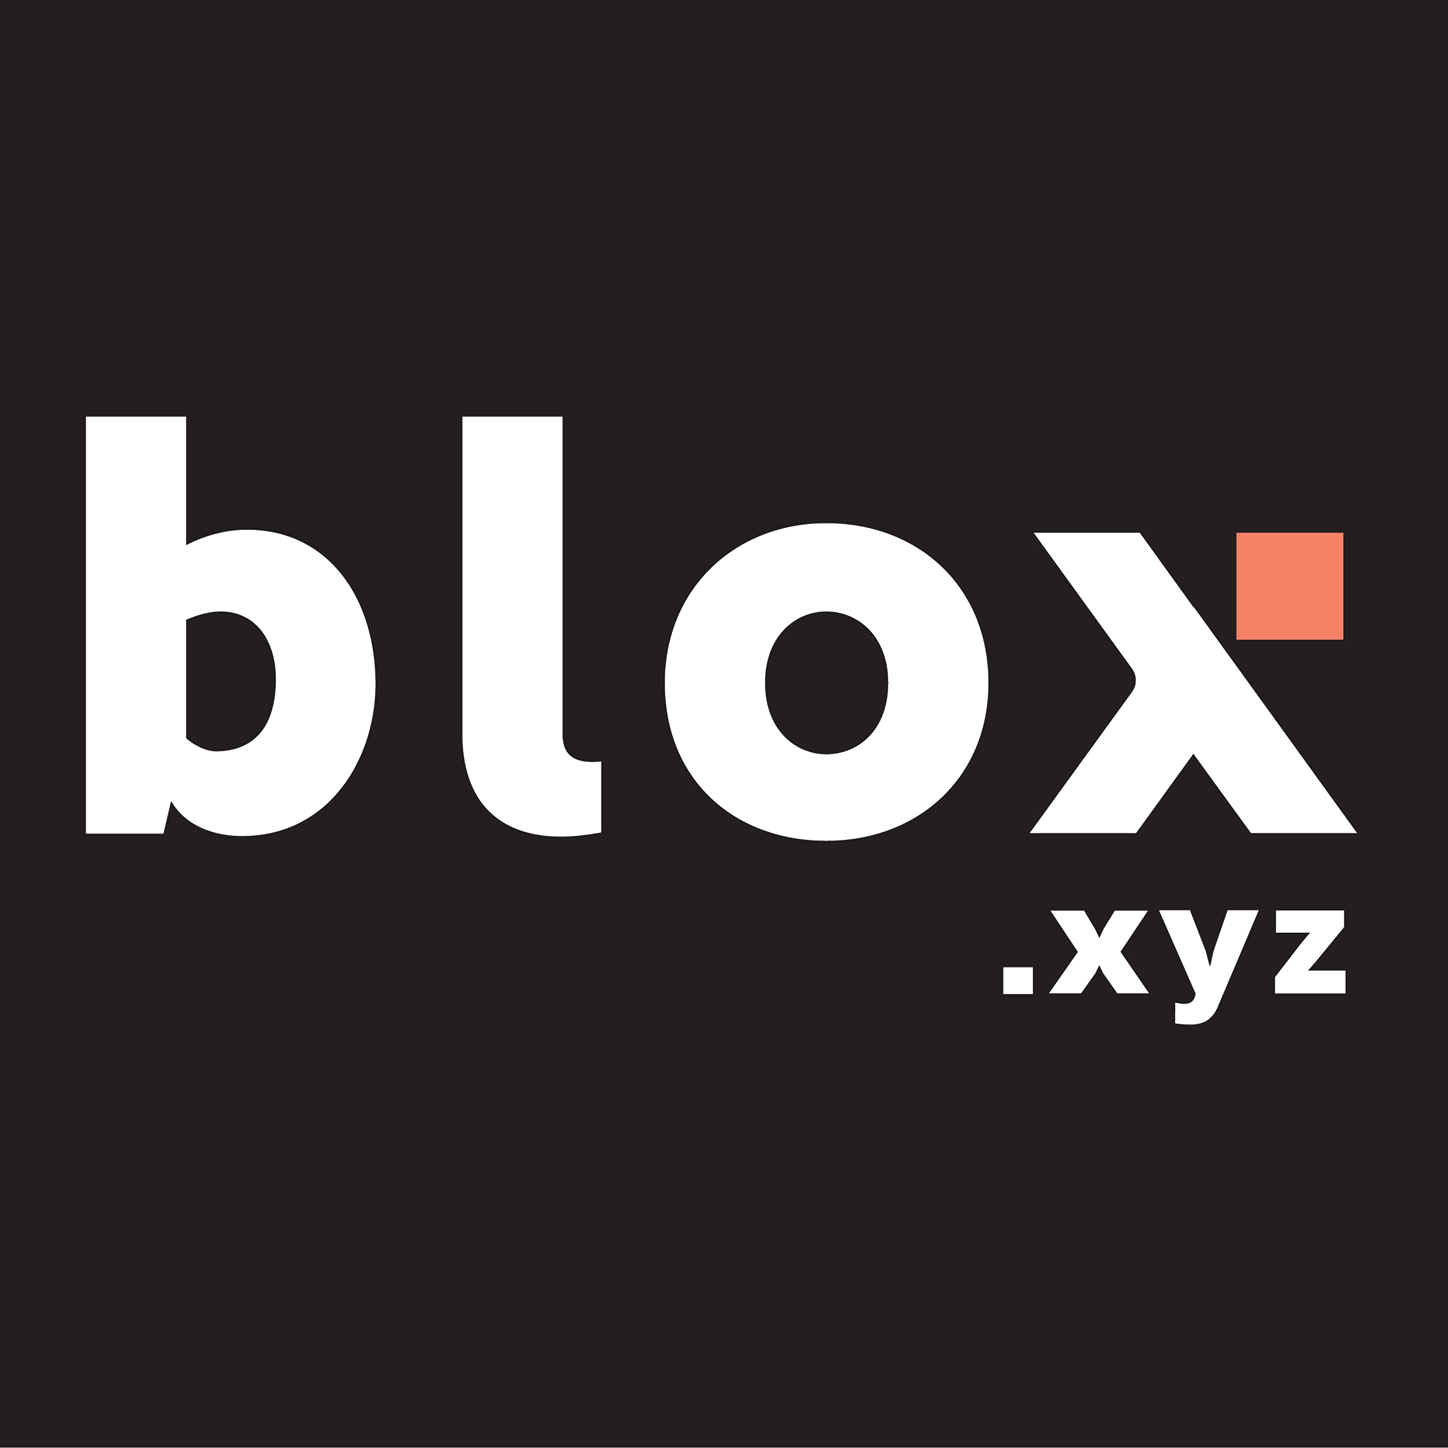 Blox raises USD 12 million in Series A funding round